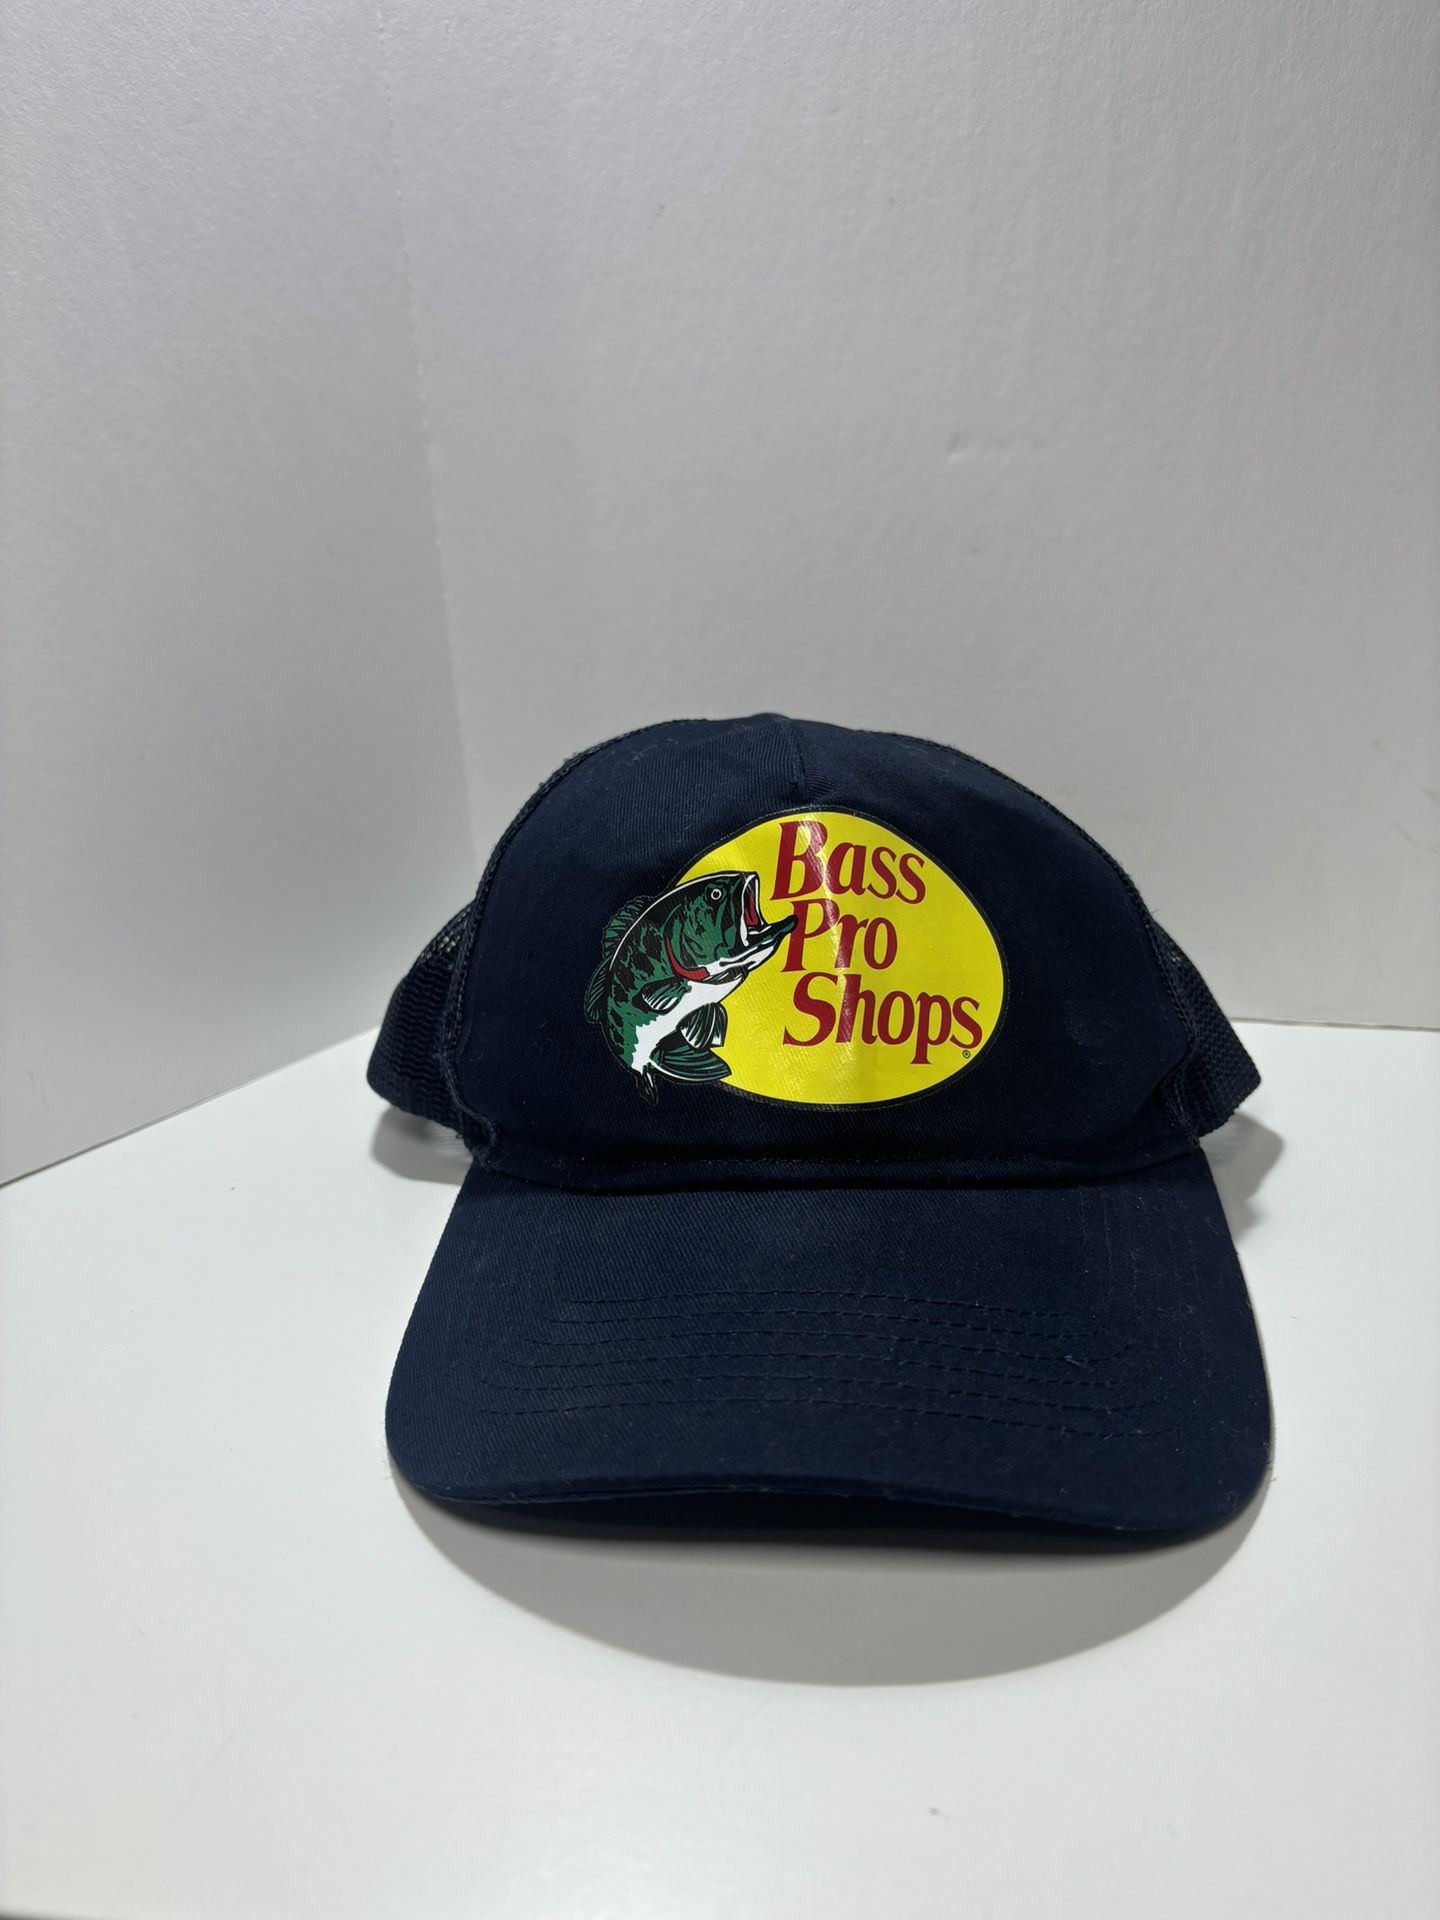 Bass Pro Shops Logo ~ Mesh Snapback Hat Fishing Outdoors ~ Navy Blue ~